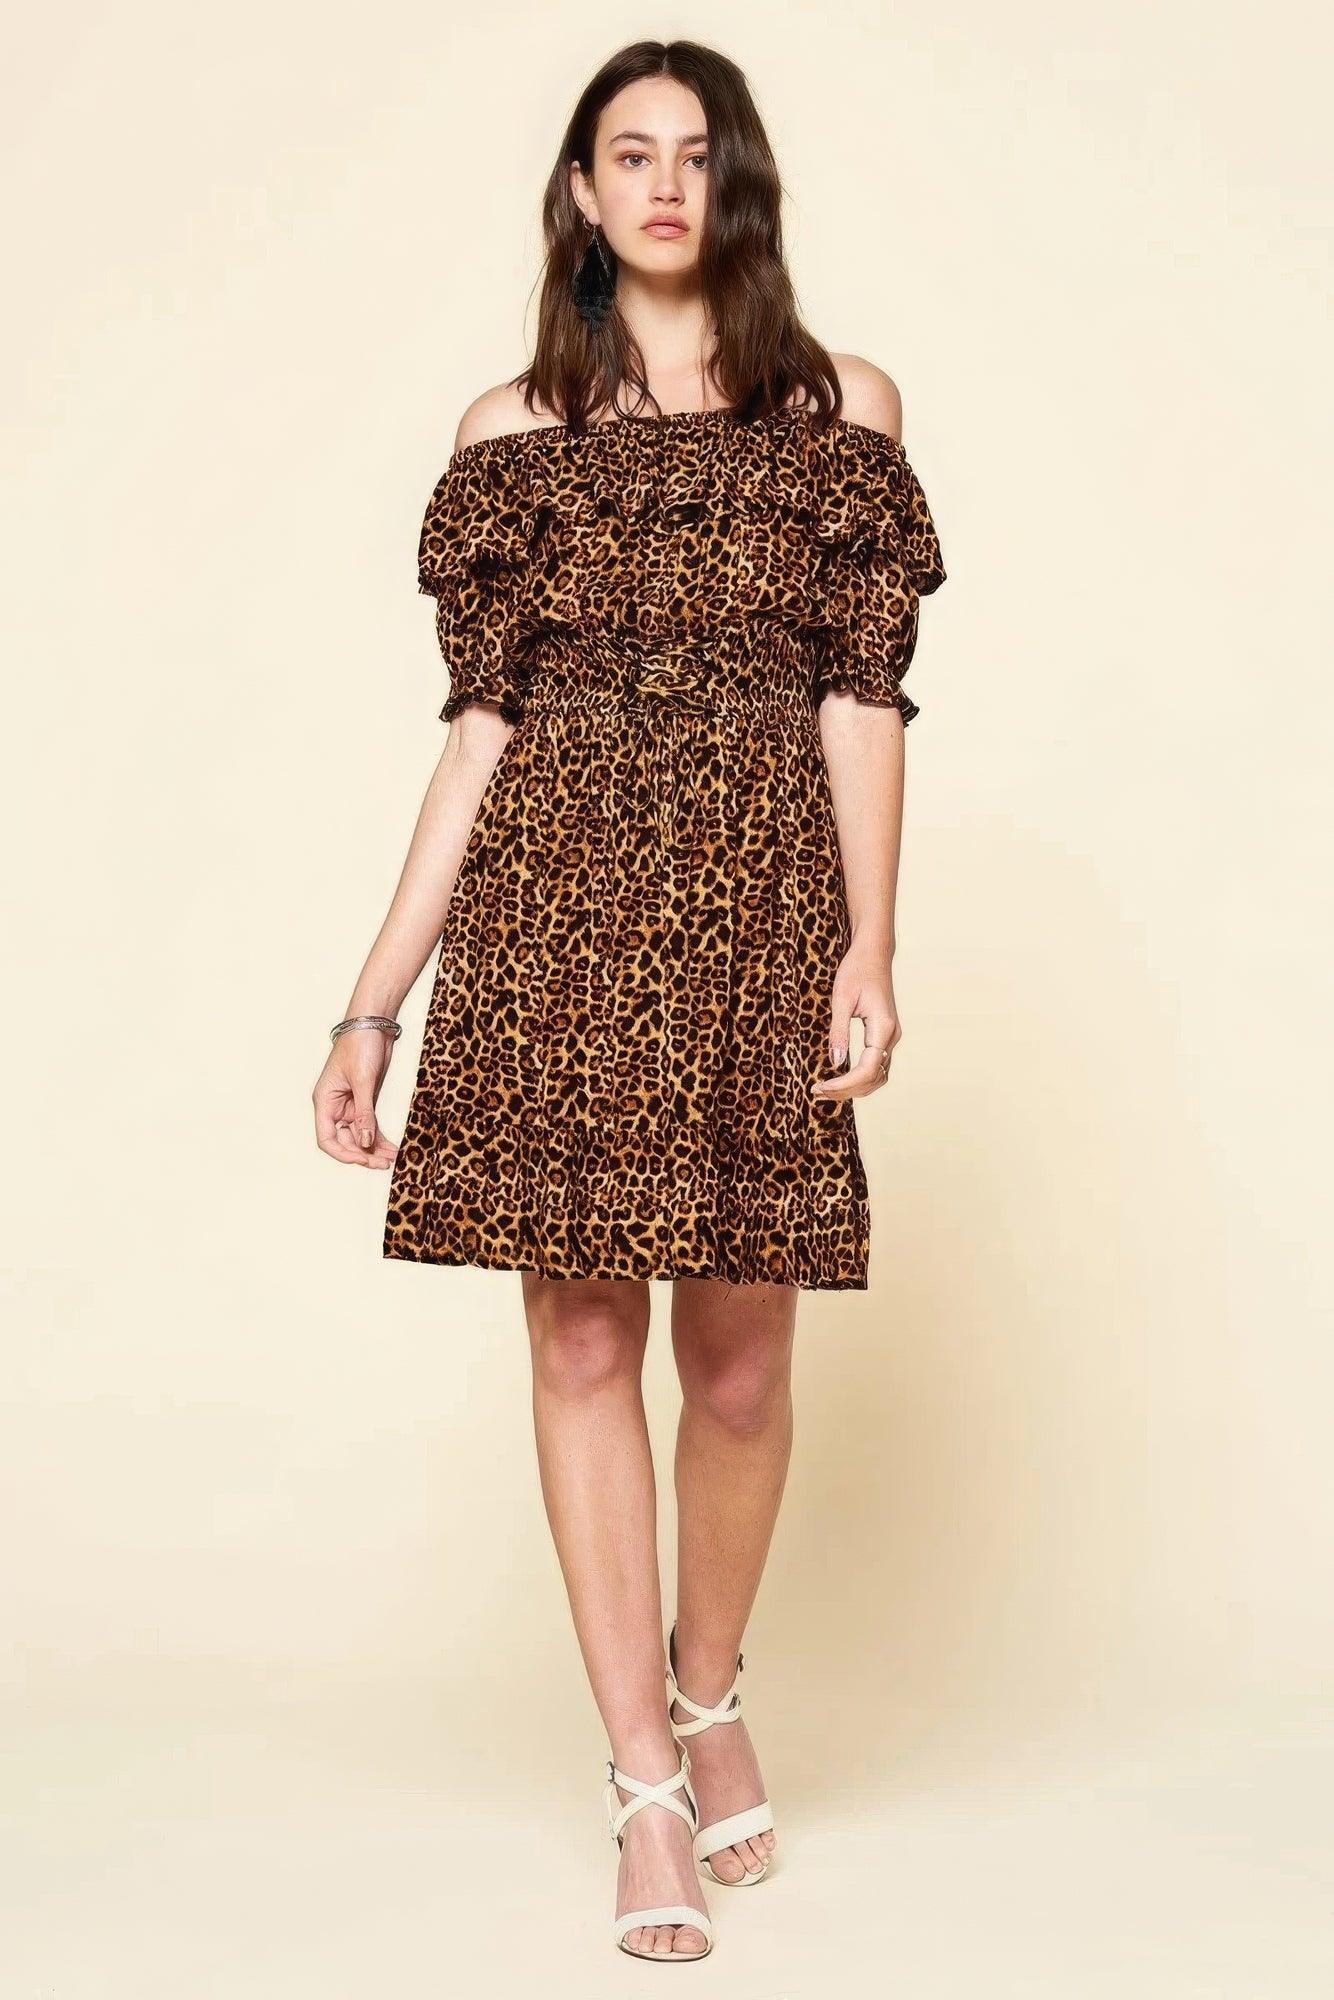 Leopard Printed Woven Dress - AMIClubwear